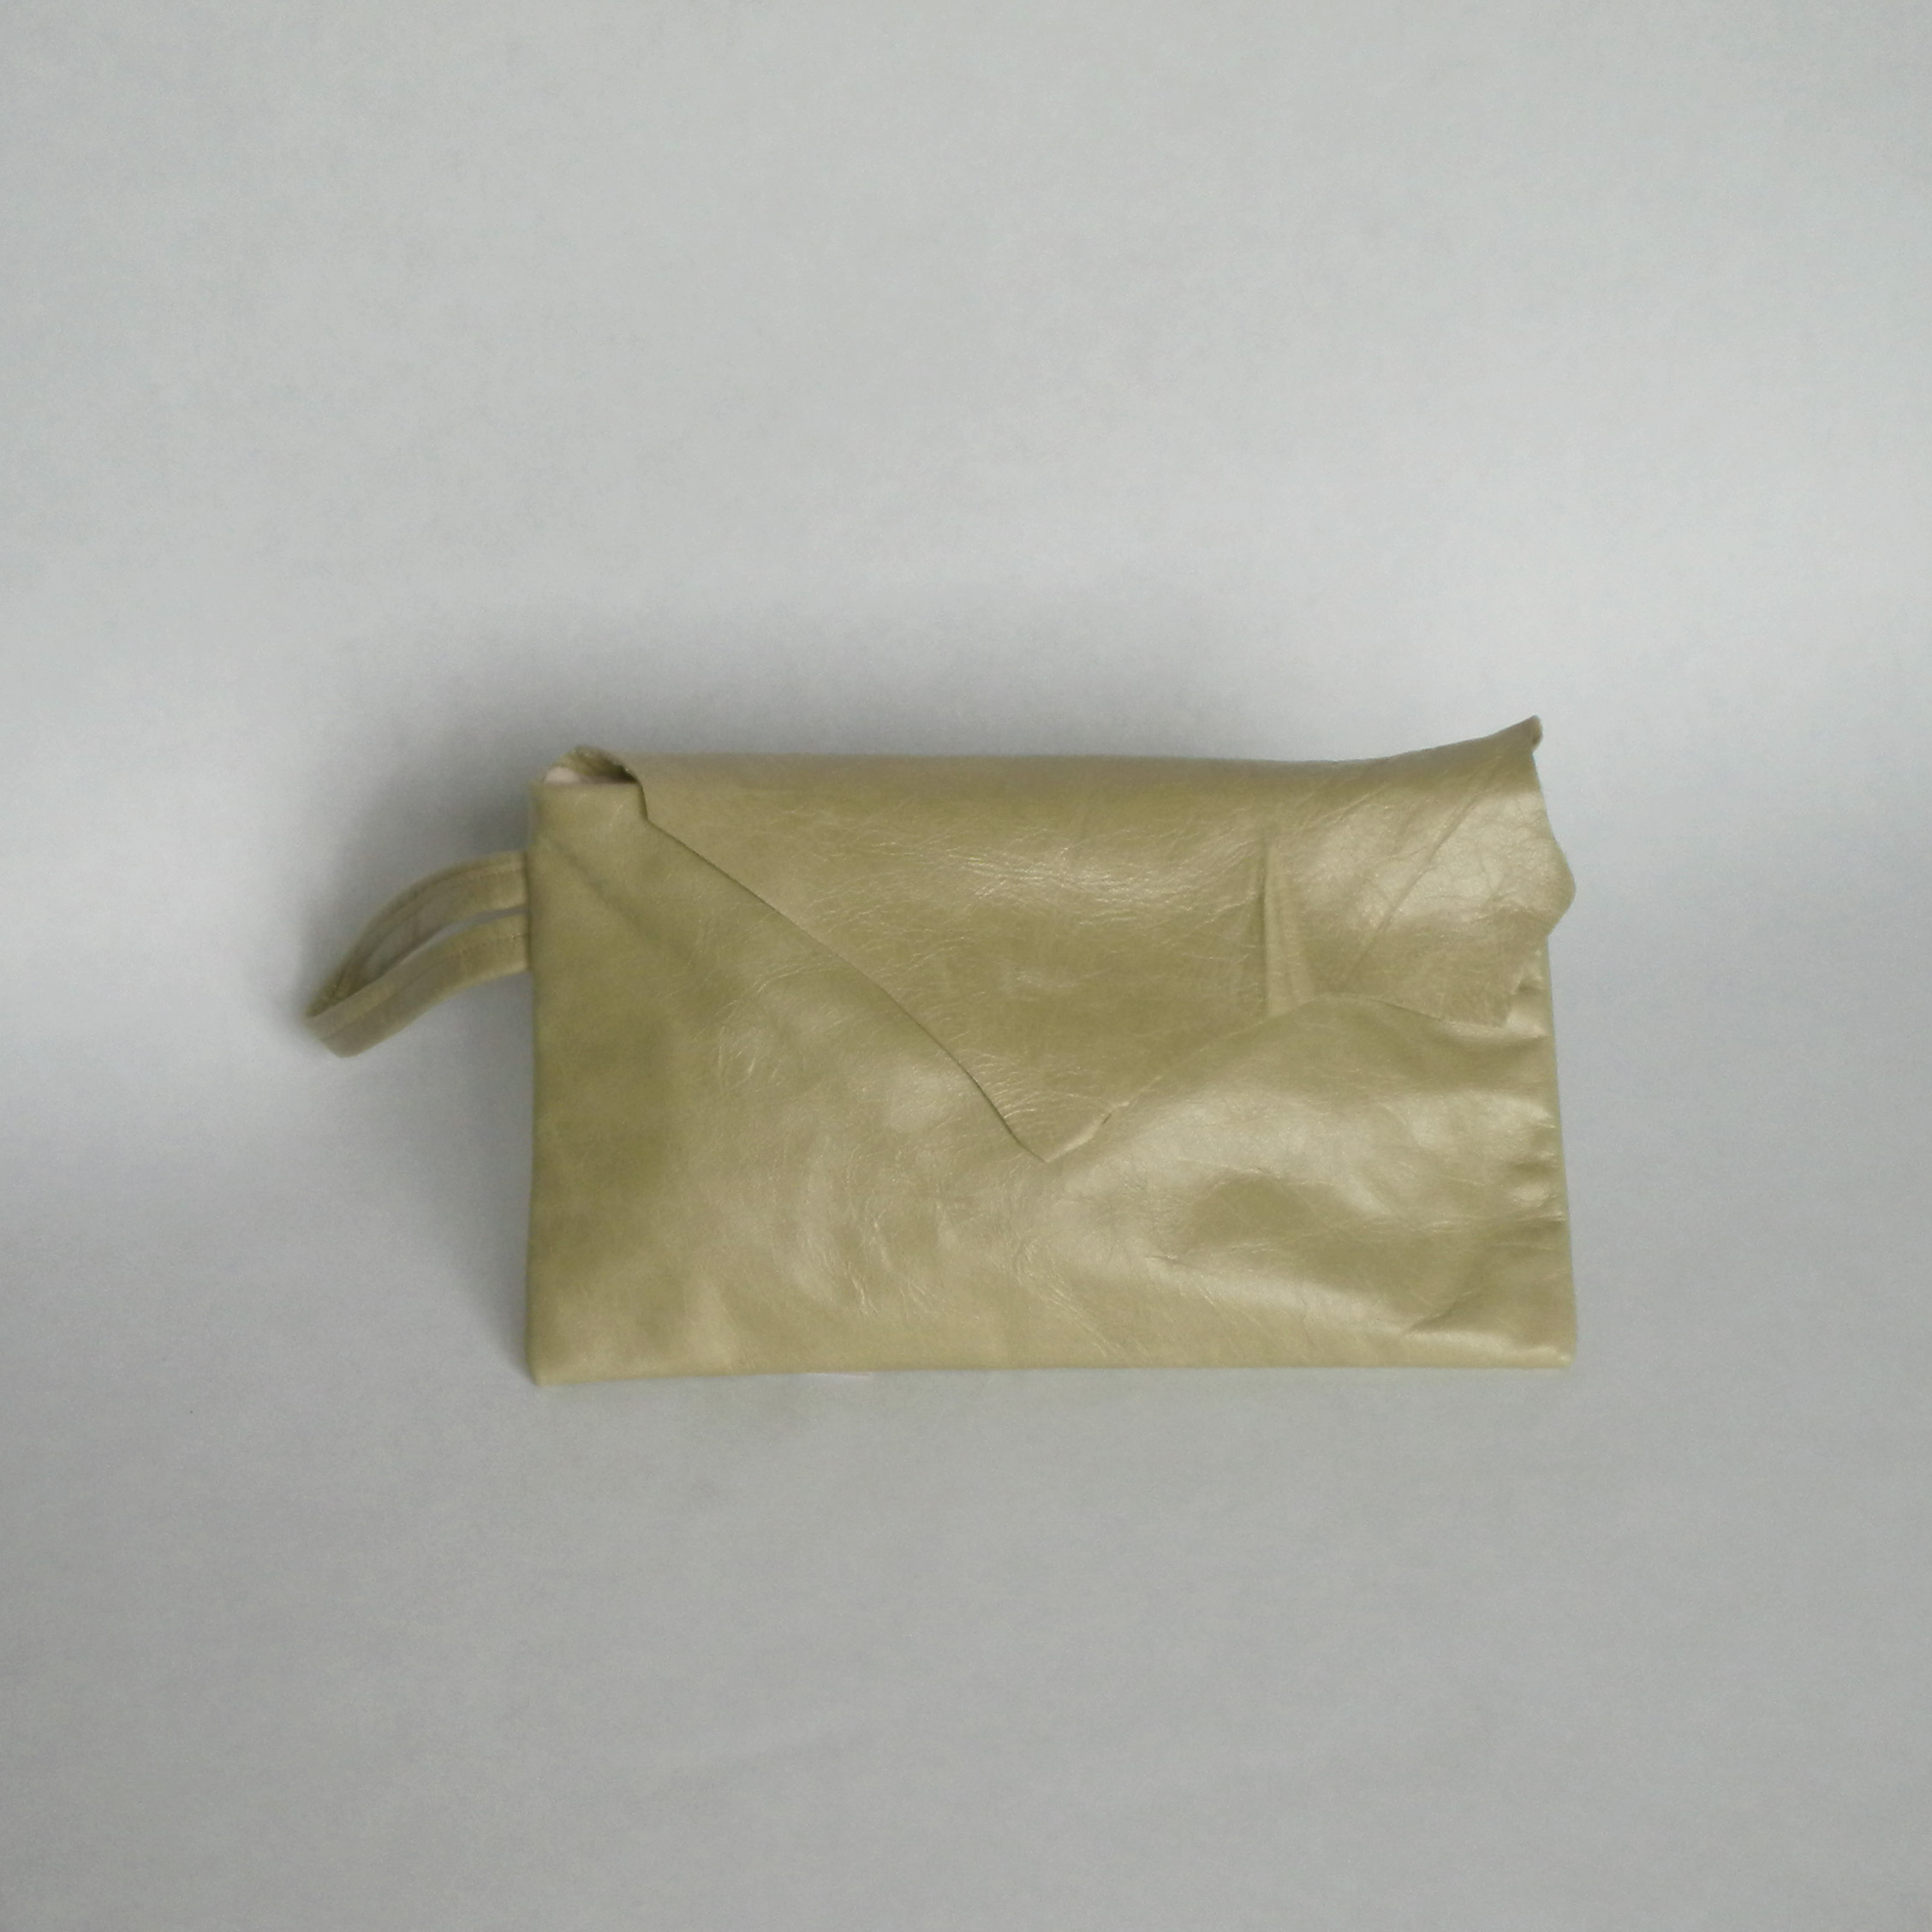  Mint leather purse